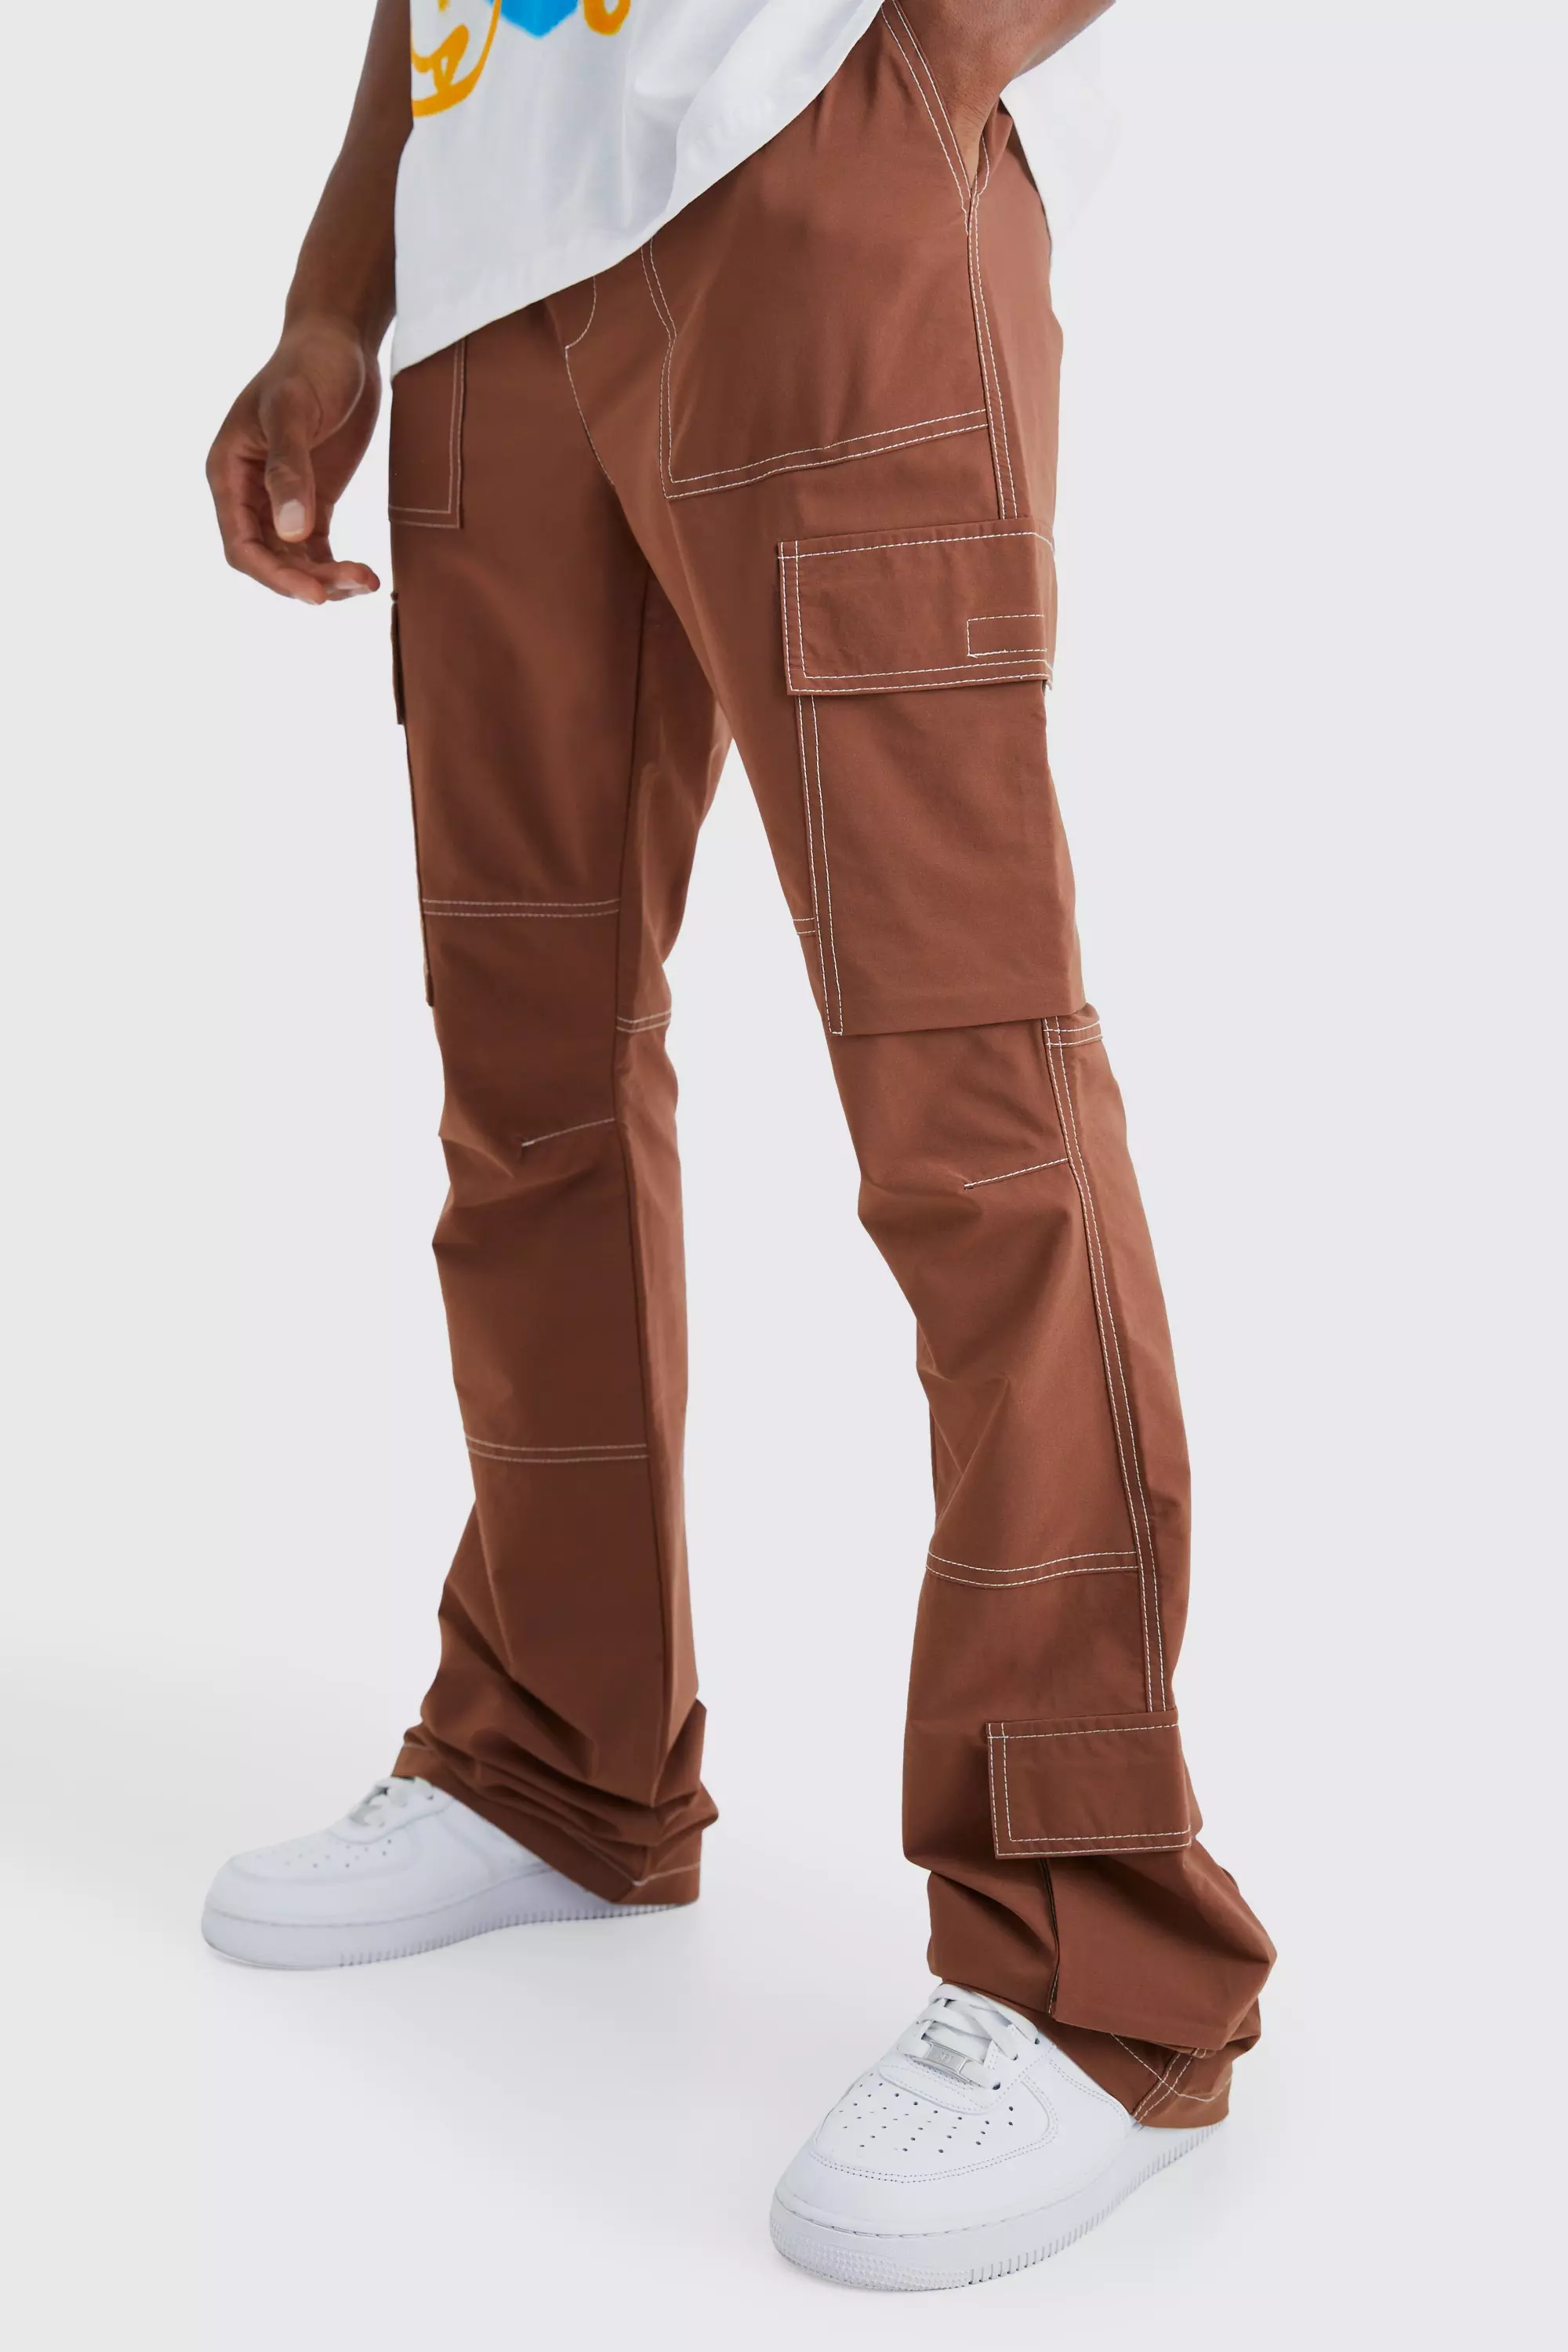 Chocolate Brown Elastic Waist Slim Flare Contrast Stitch Cargo Pants